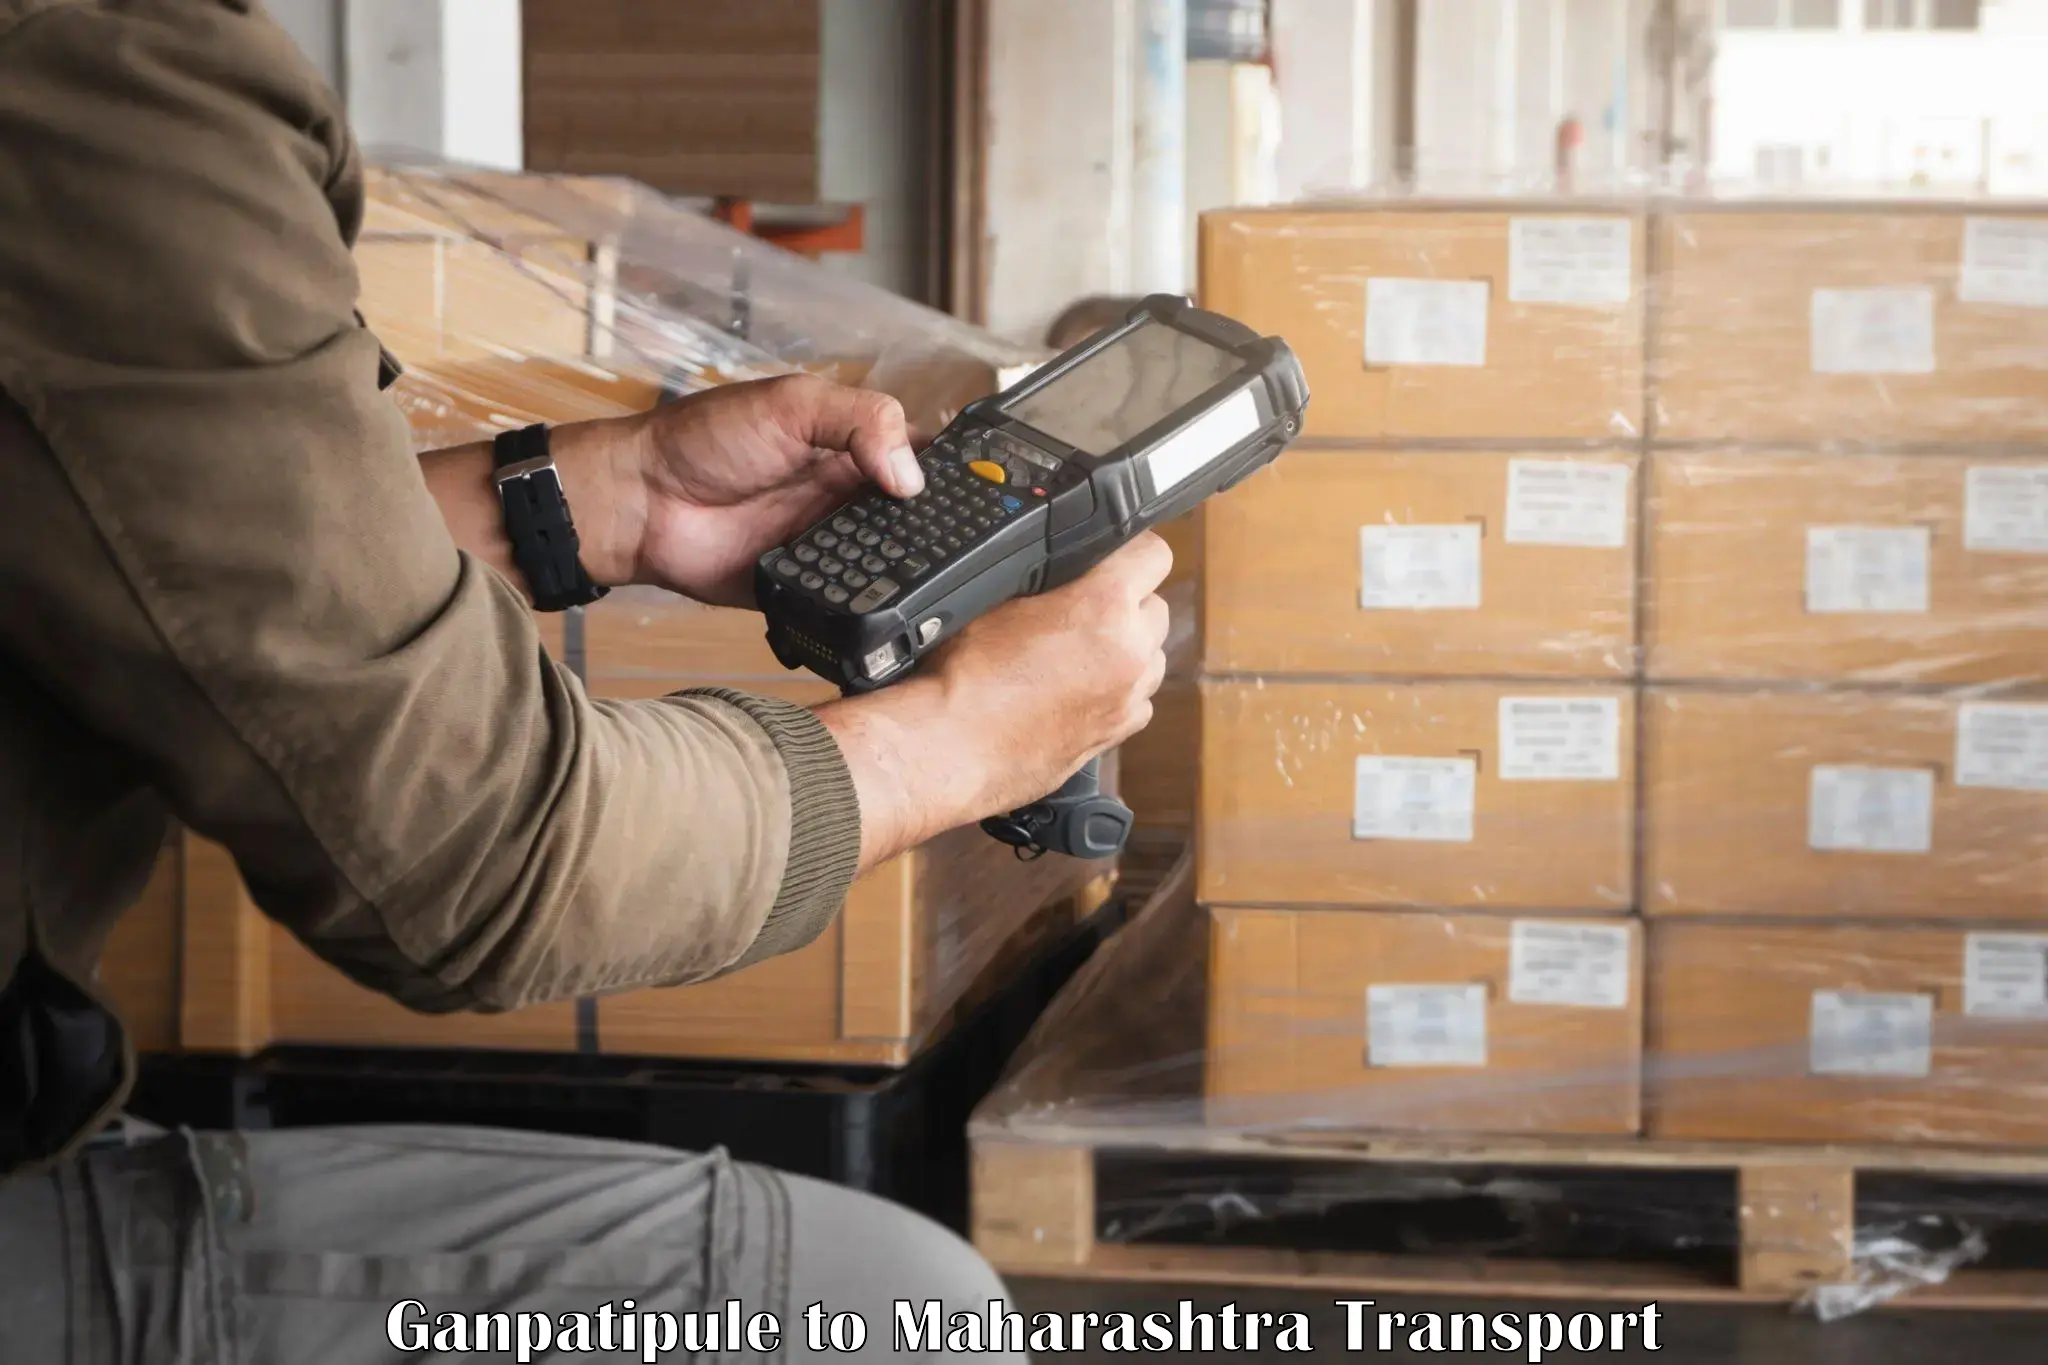 Transport shared services Ganpatipule to Maharashtra